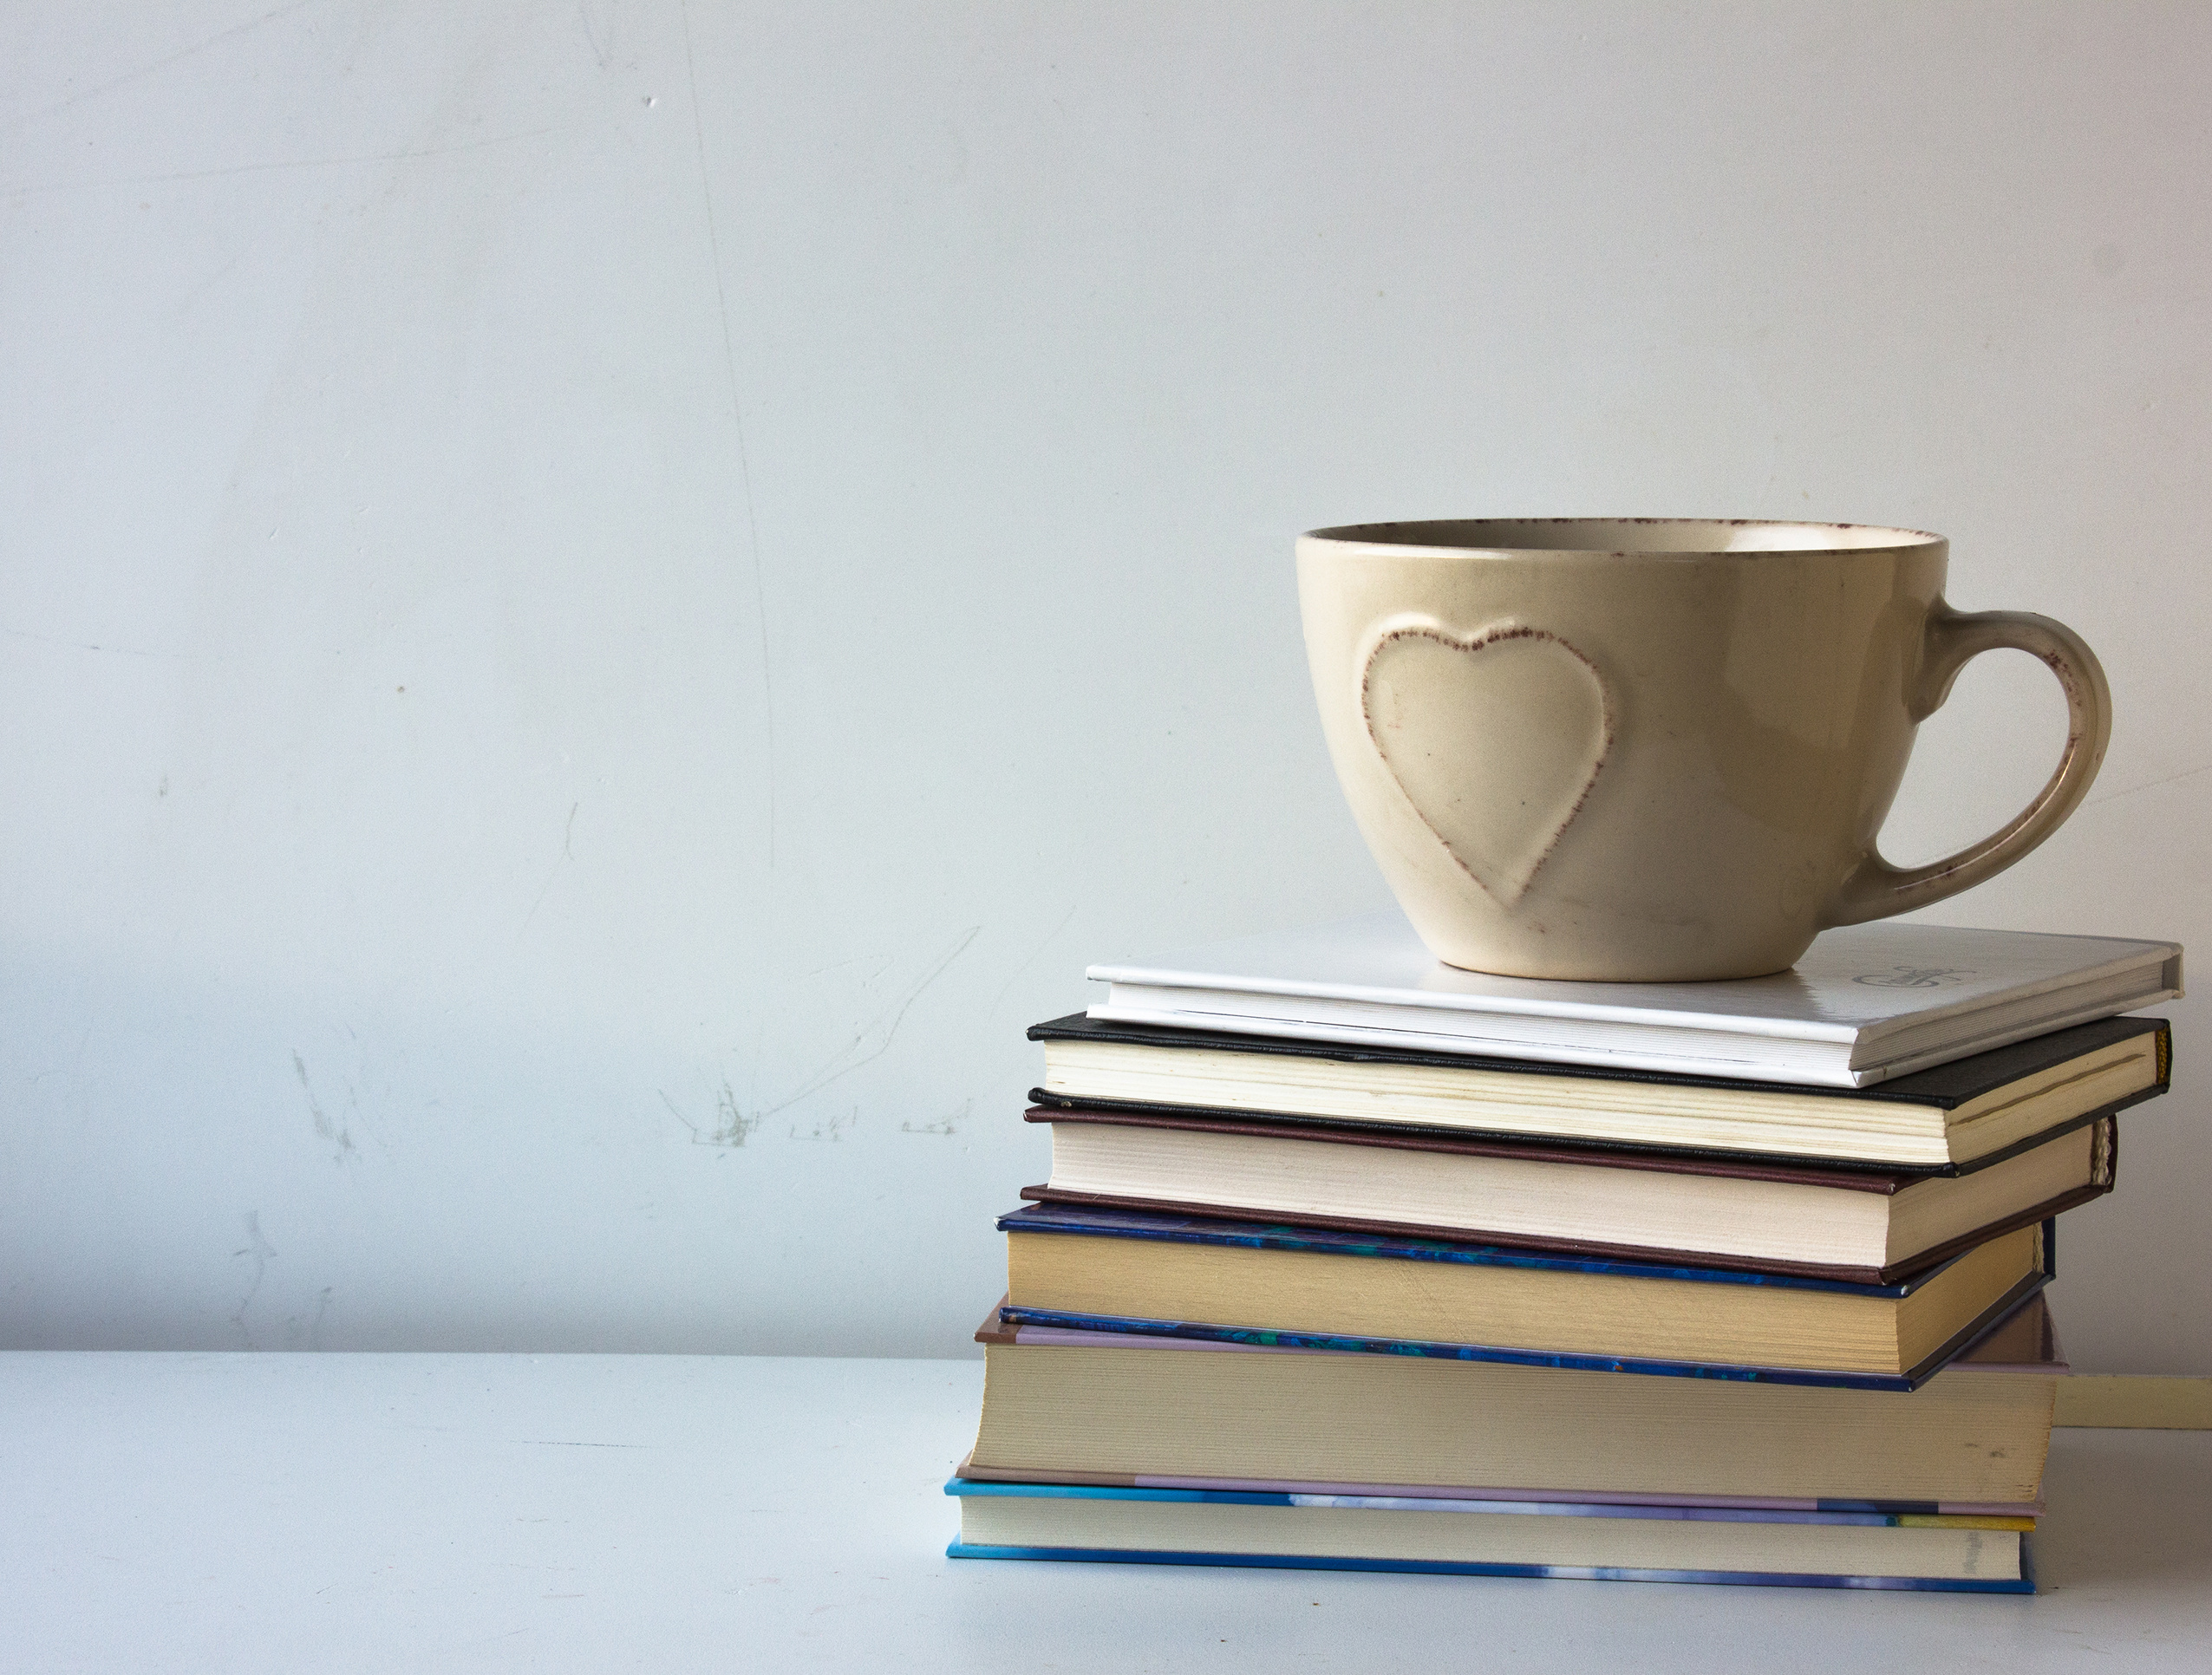 A mug on a stack of books